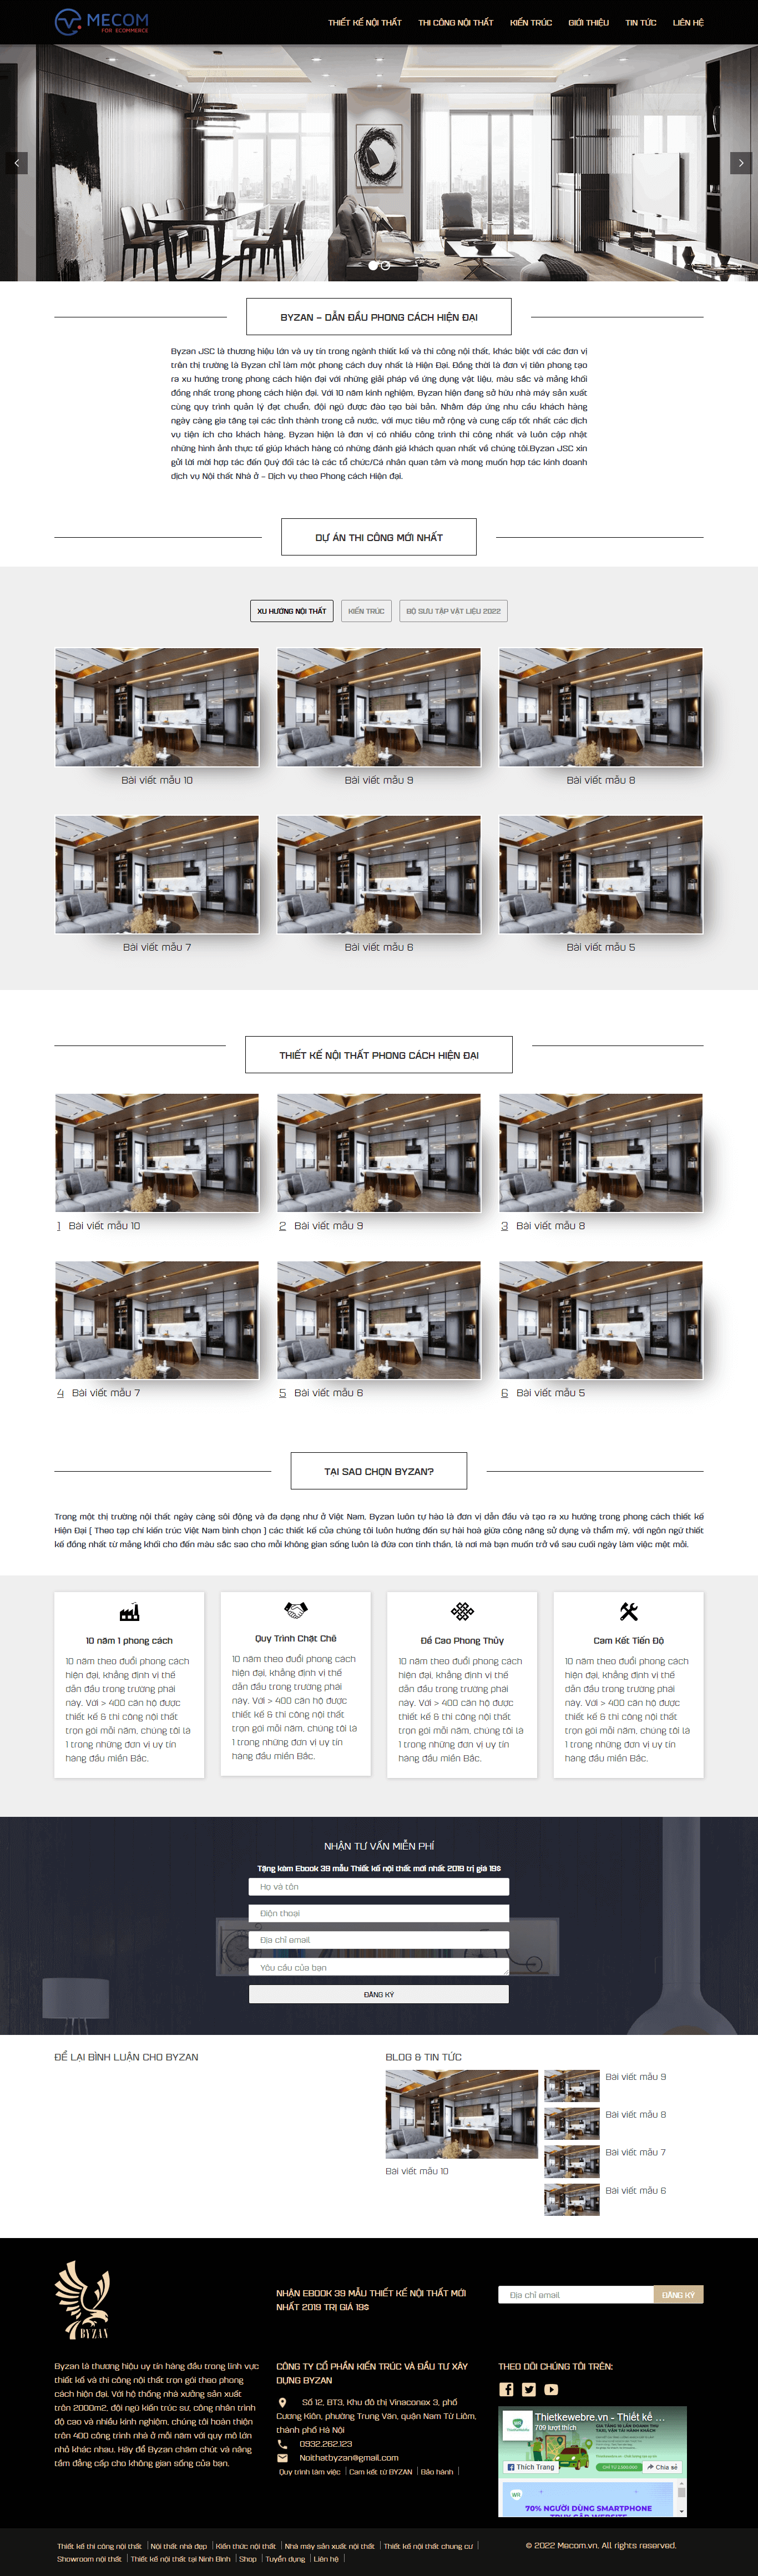 Mẫu thiết kế website -Thiết kế nội thất Byzan